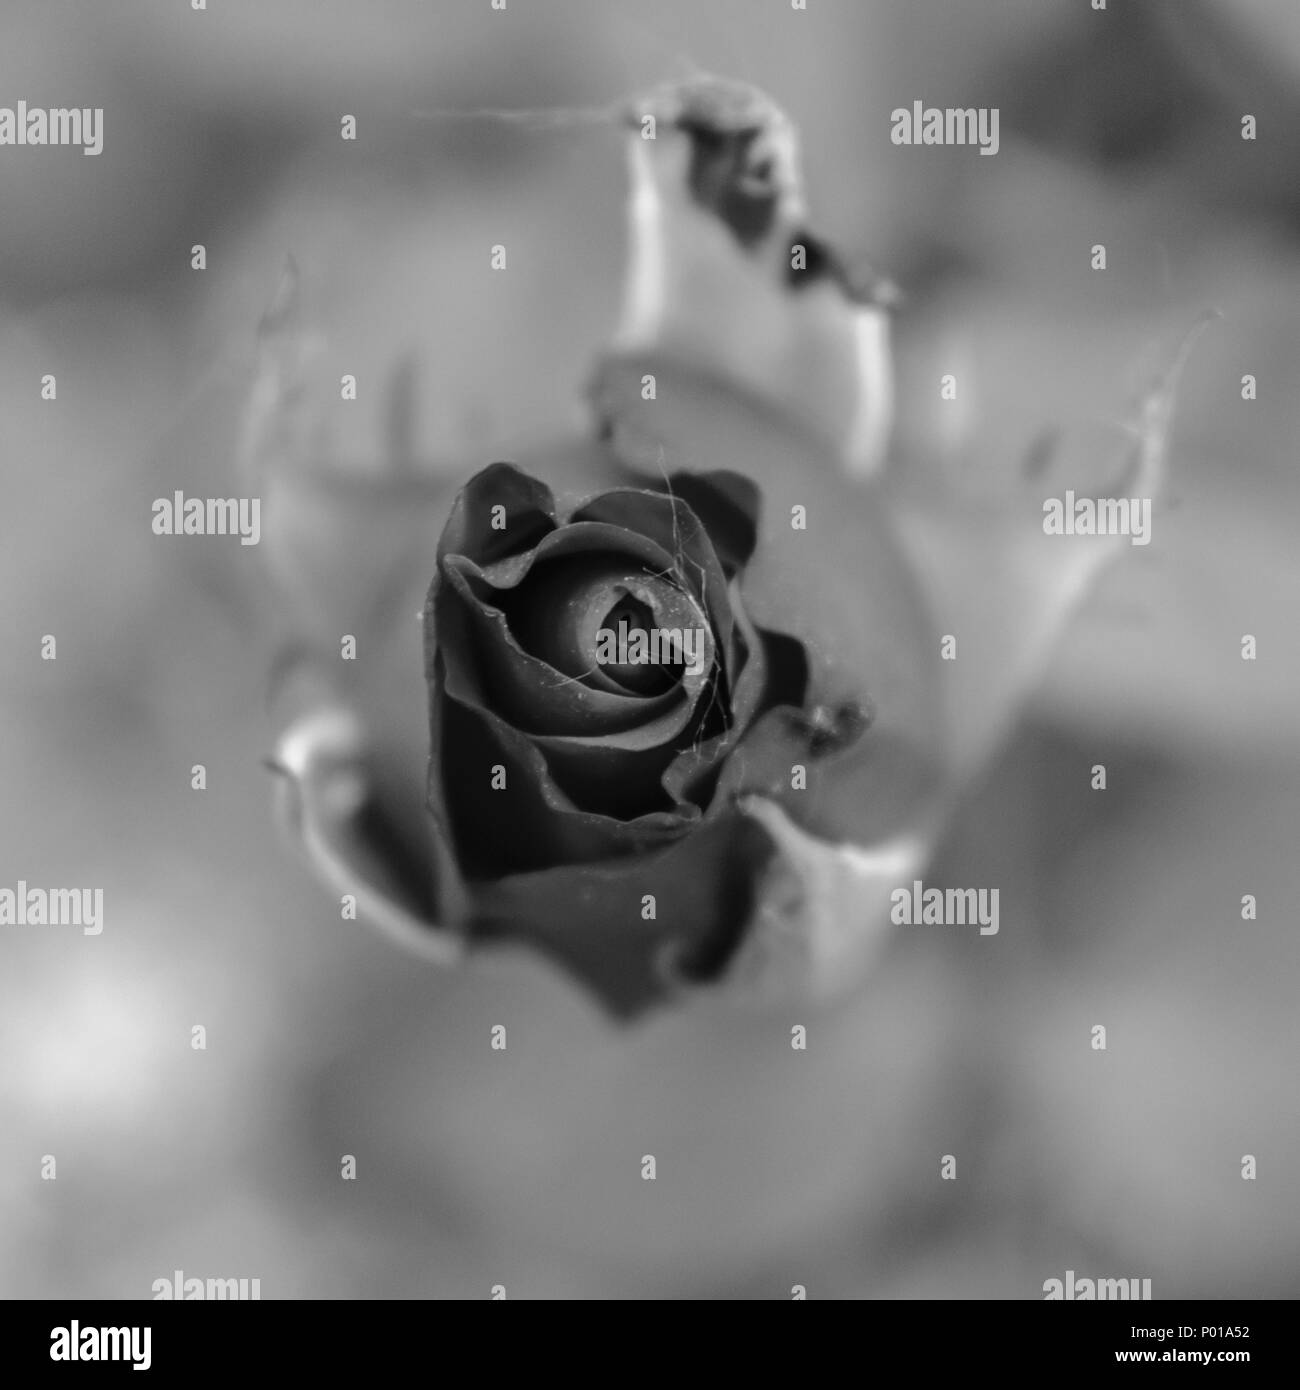 Shrub roses Black and White Stock Photos & Images - Alamy